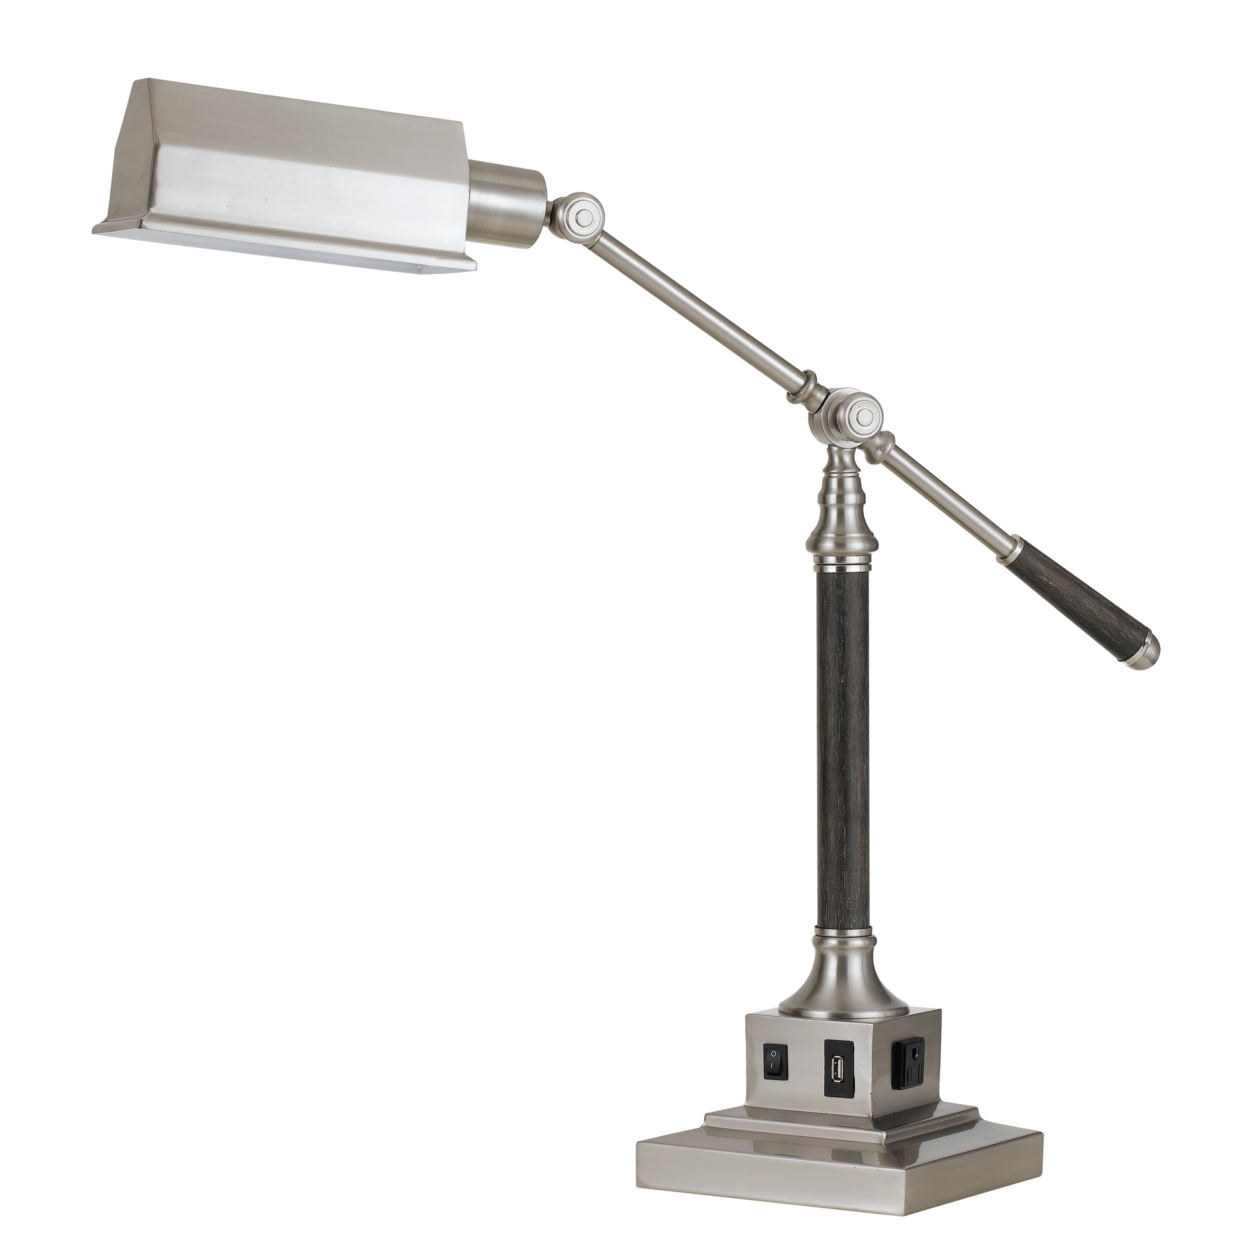 60 Watt Metal Desk Lamp With Adjustable Arm And Head, Silver- Saltoro Sherpi